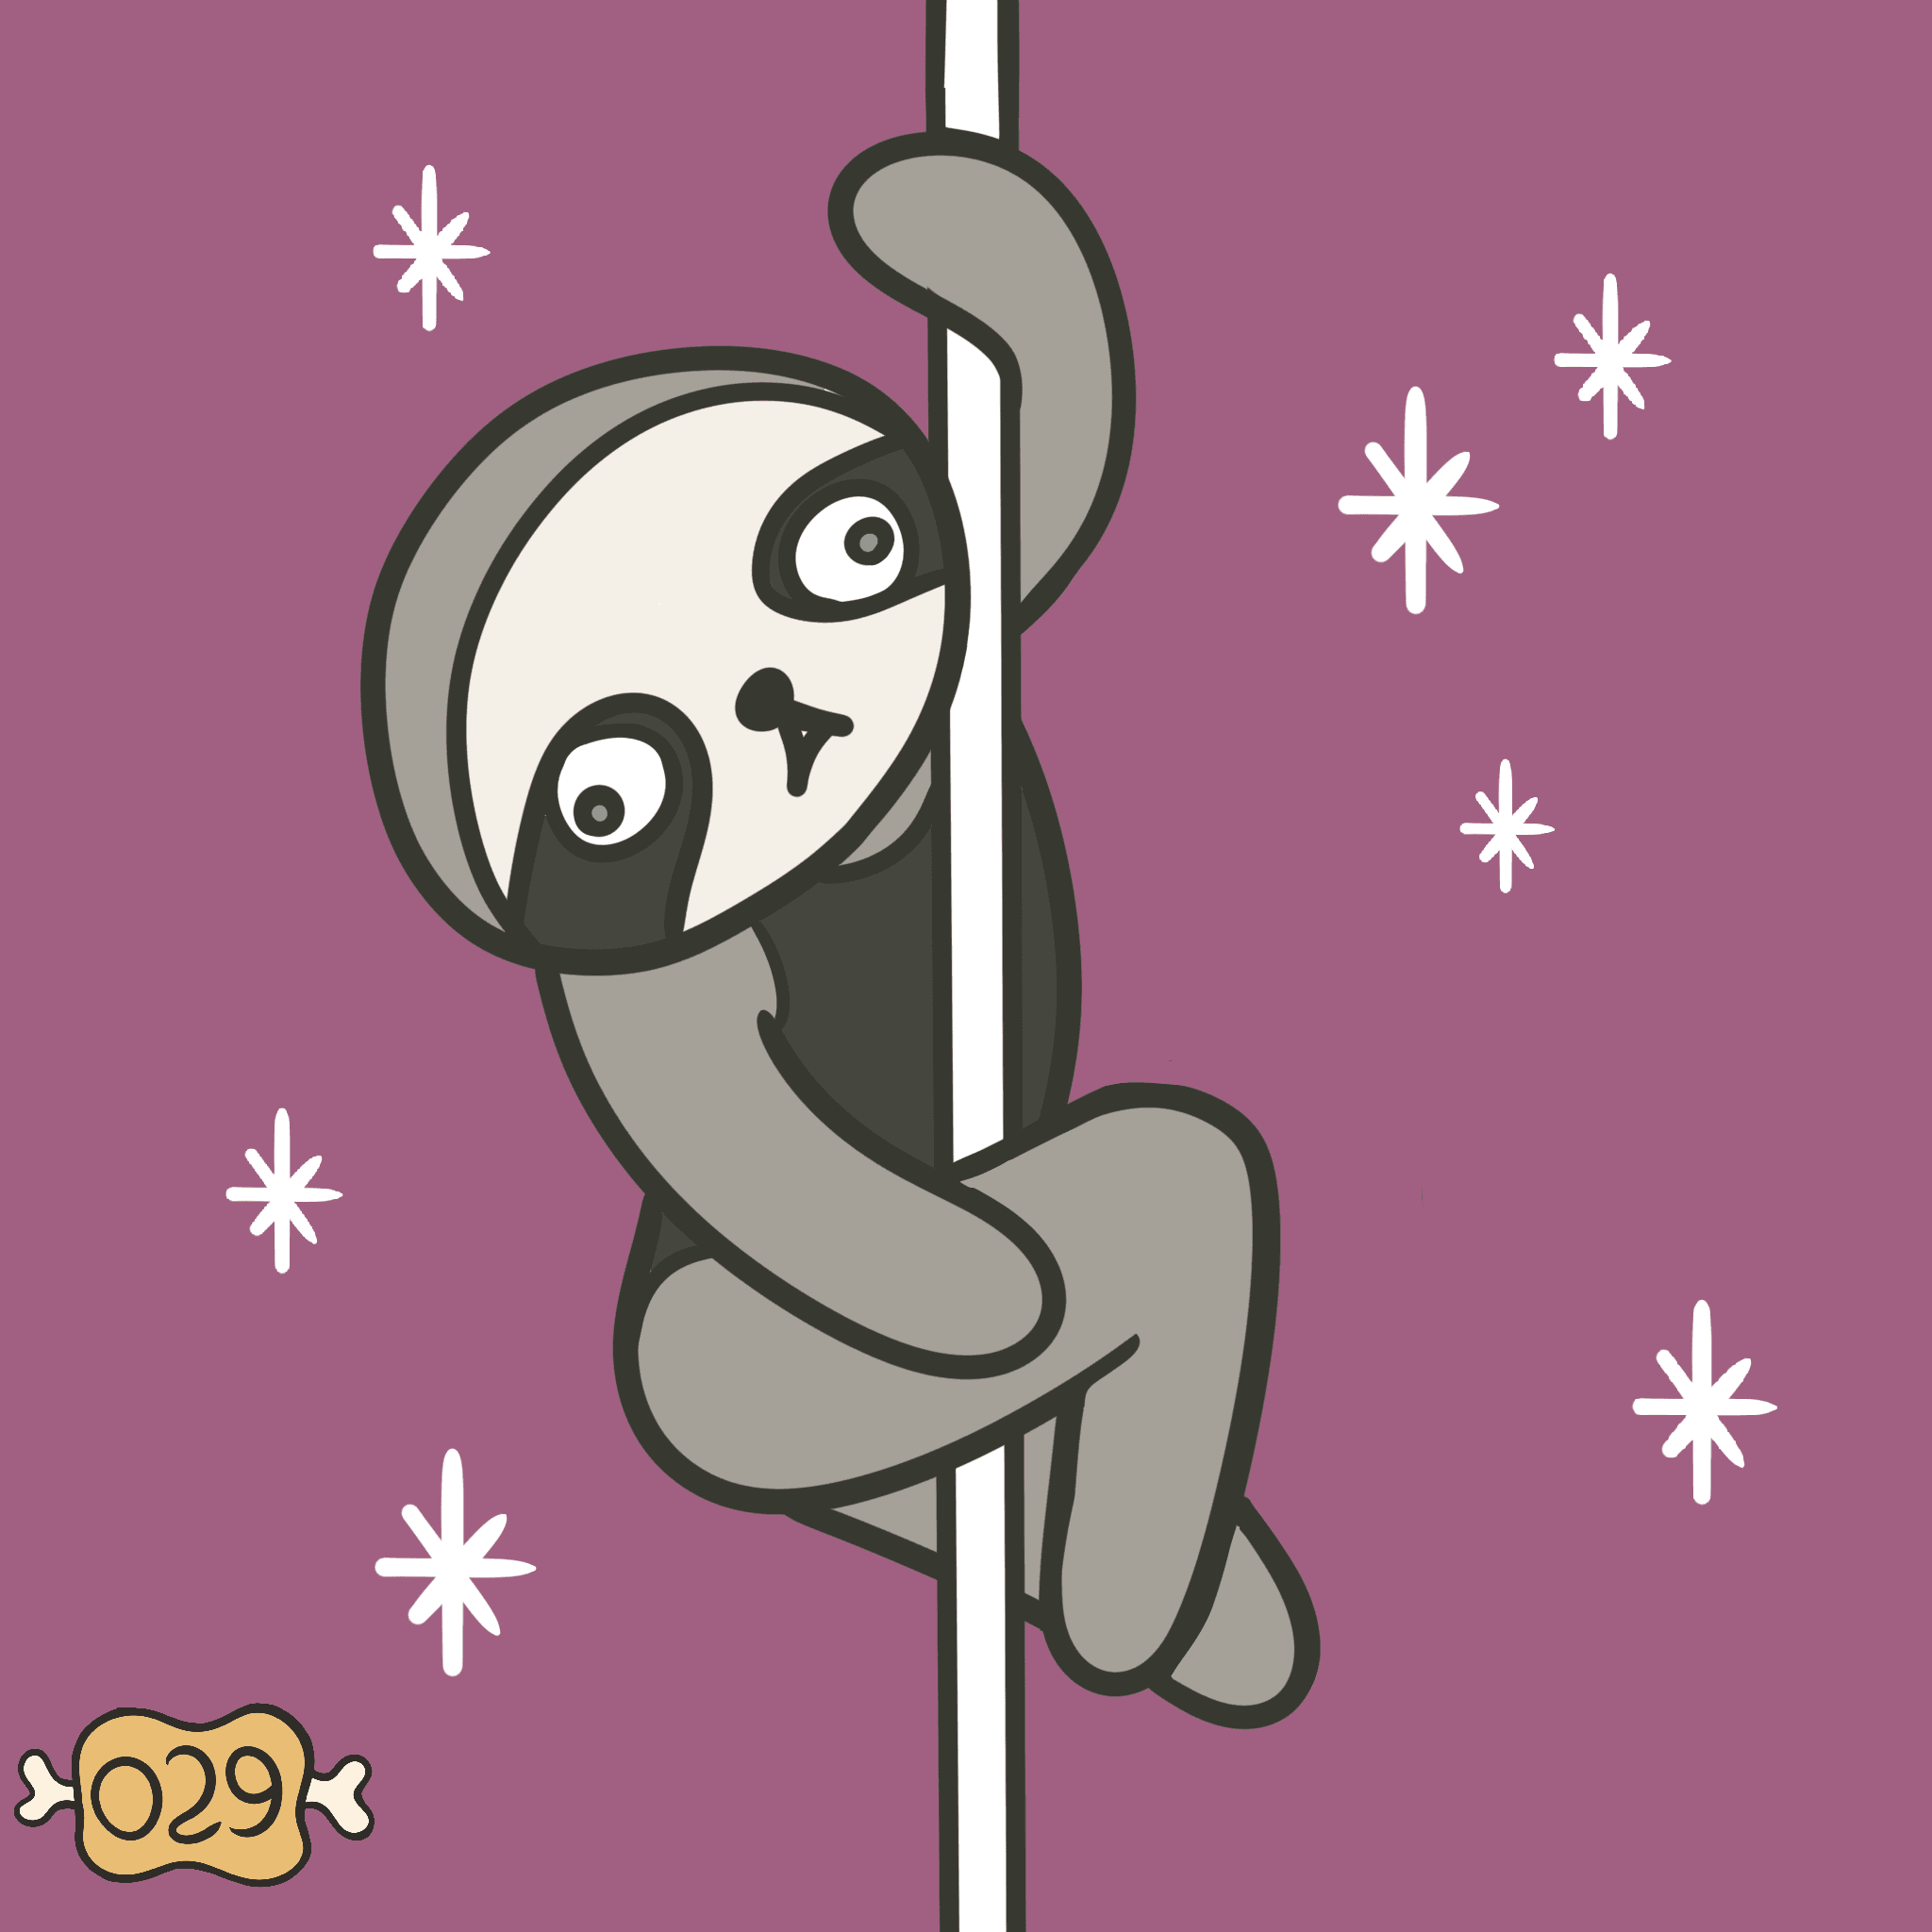 Sloth of a pole dancer（ポールダンサーのナマケモノ）